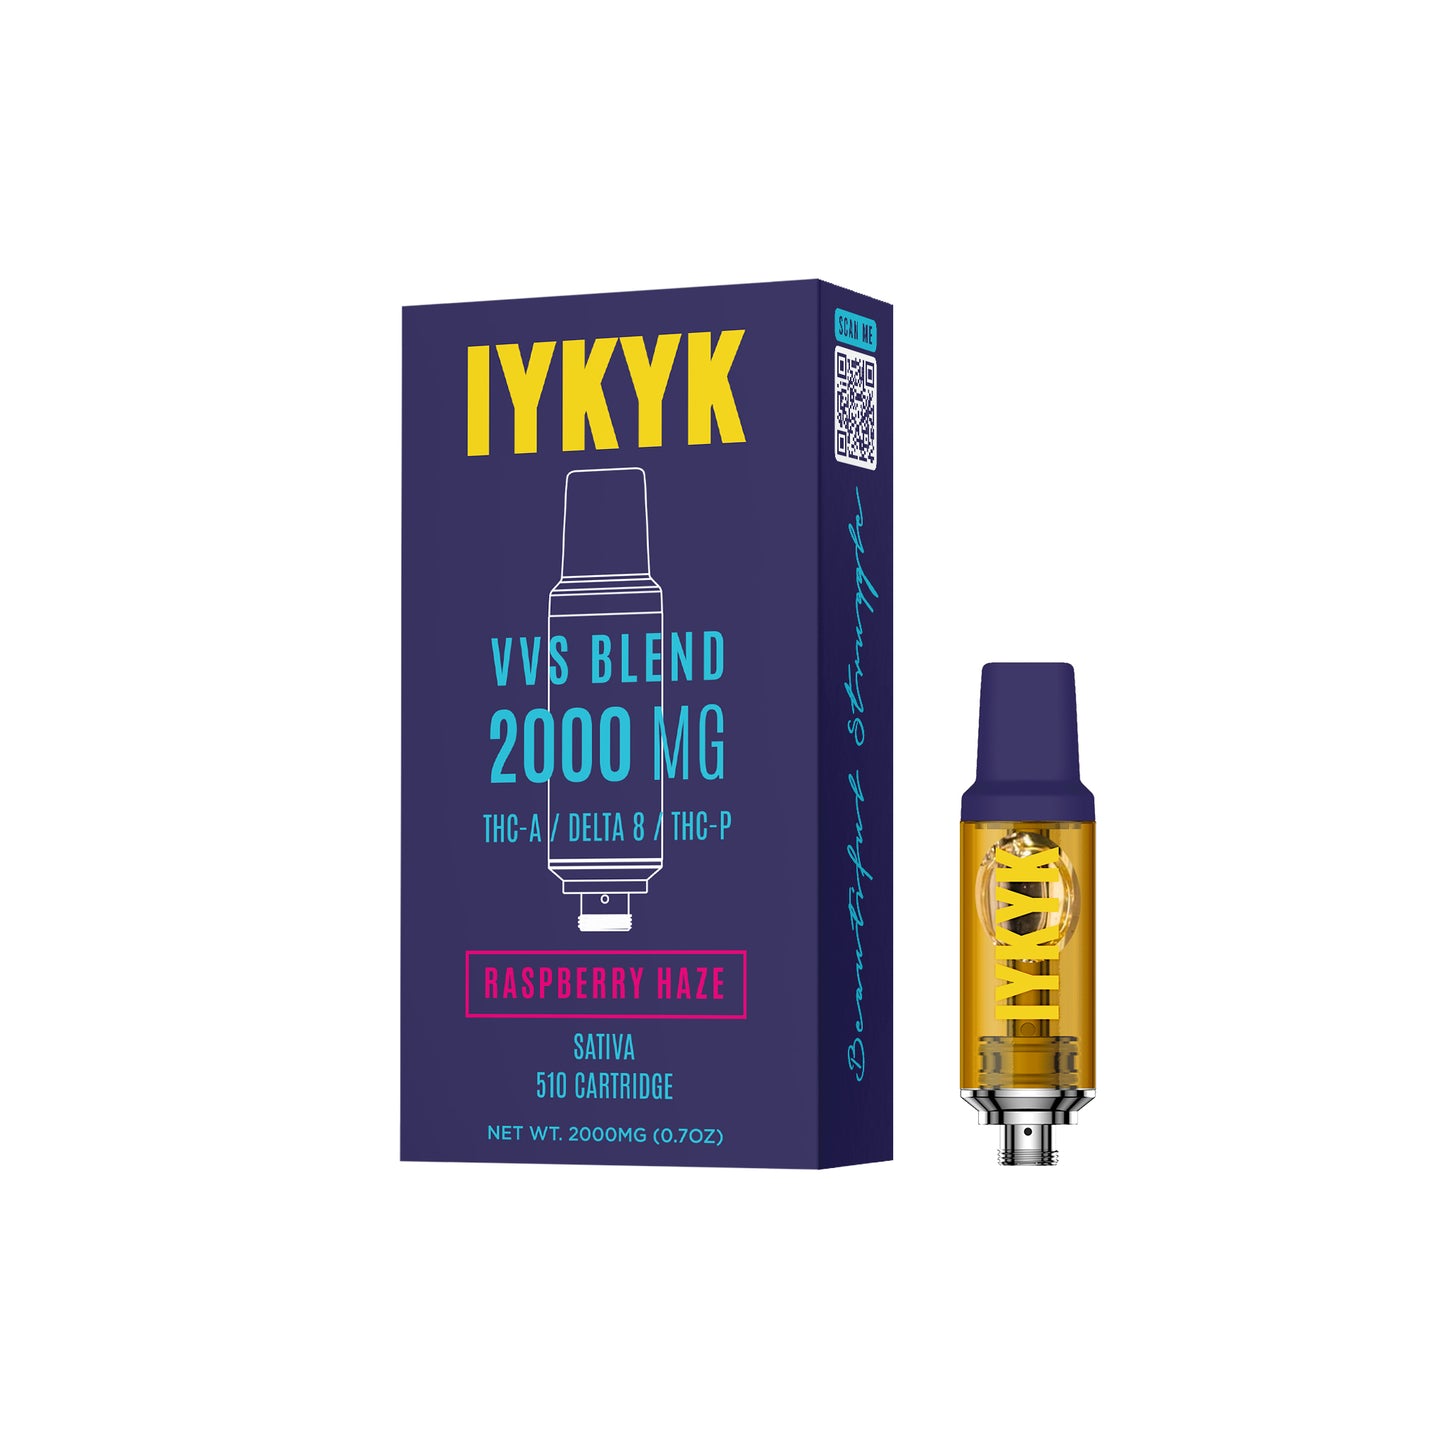 IYKYK VVS Blend Raspberry Haze Cartridge 2G